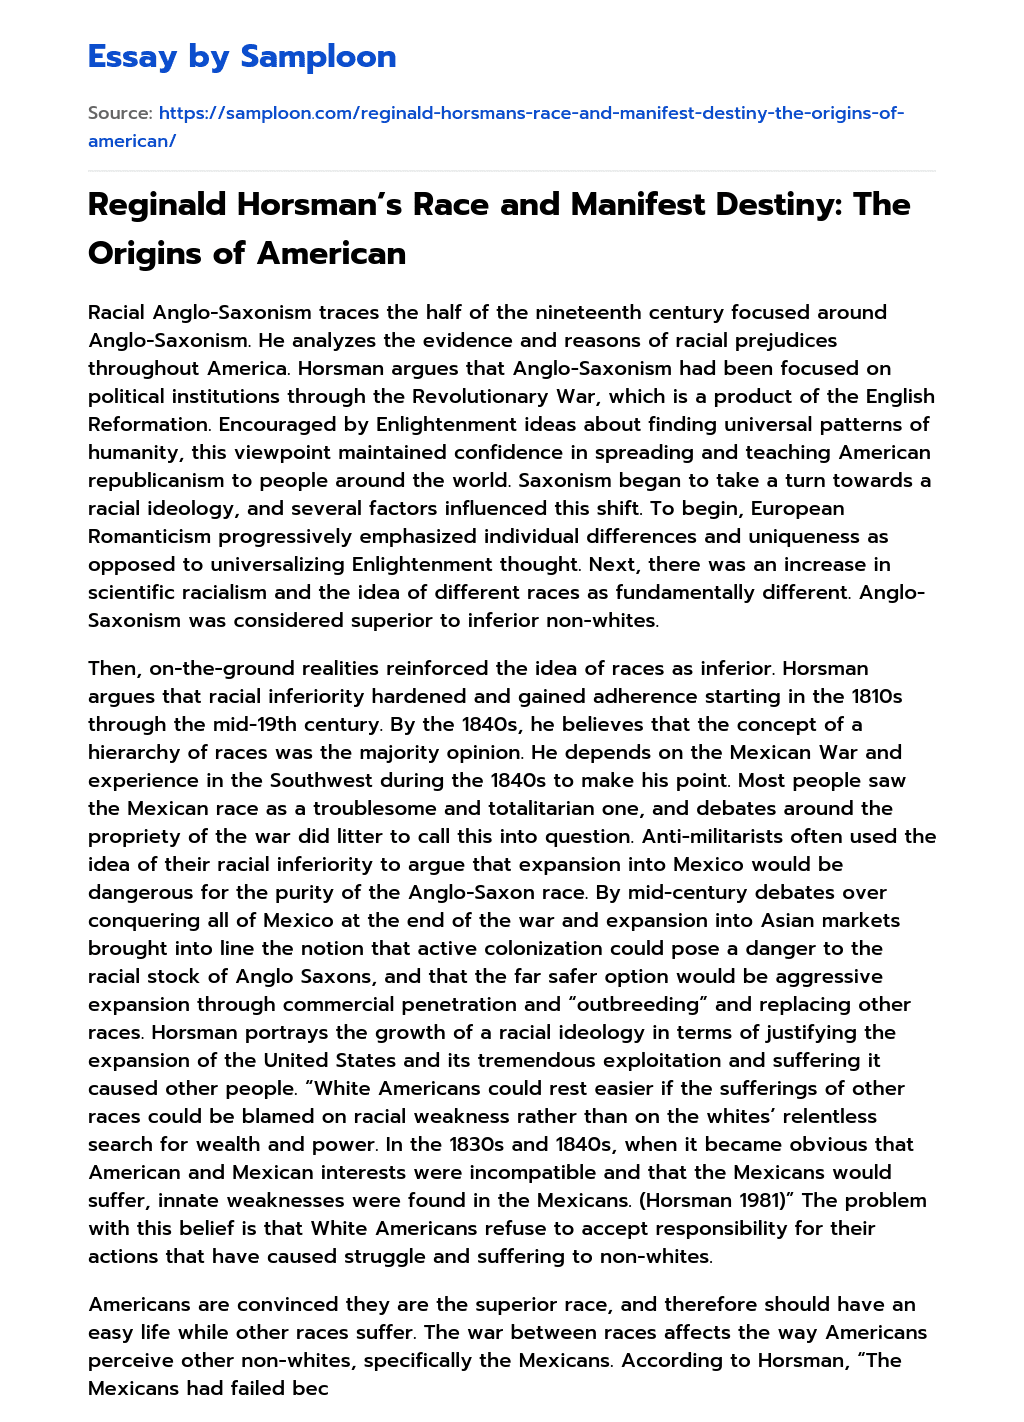 Reginald Horsman’s Race and Manifest Destiny: The Origins of American essay